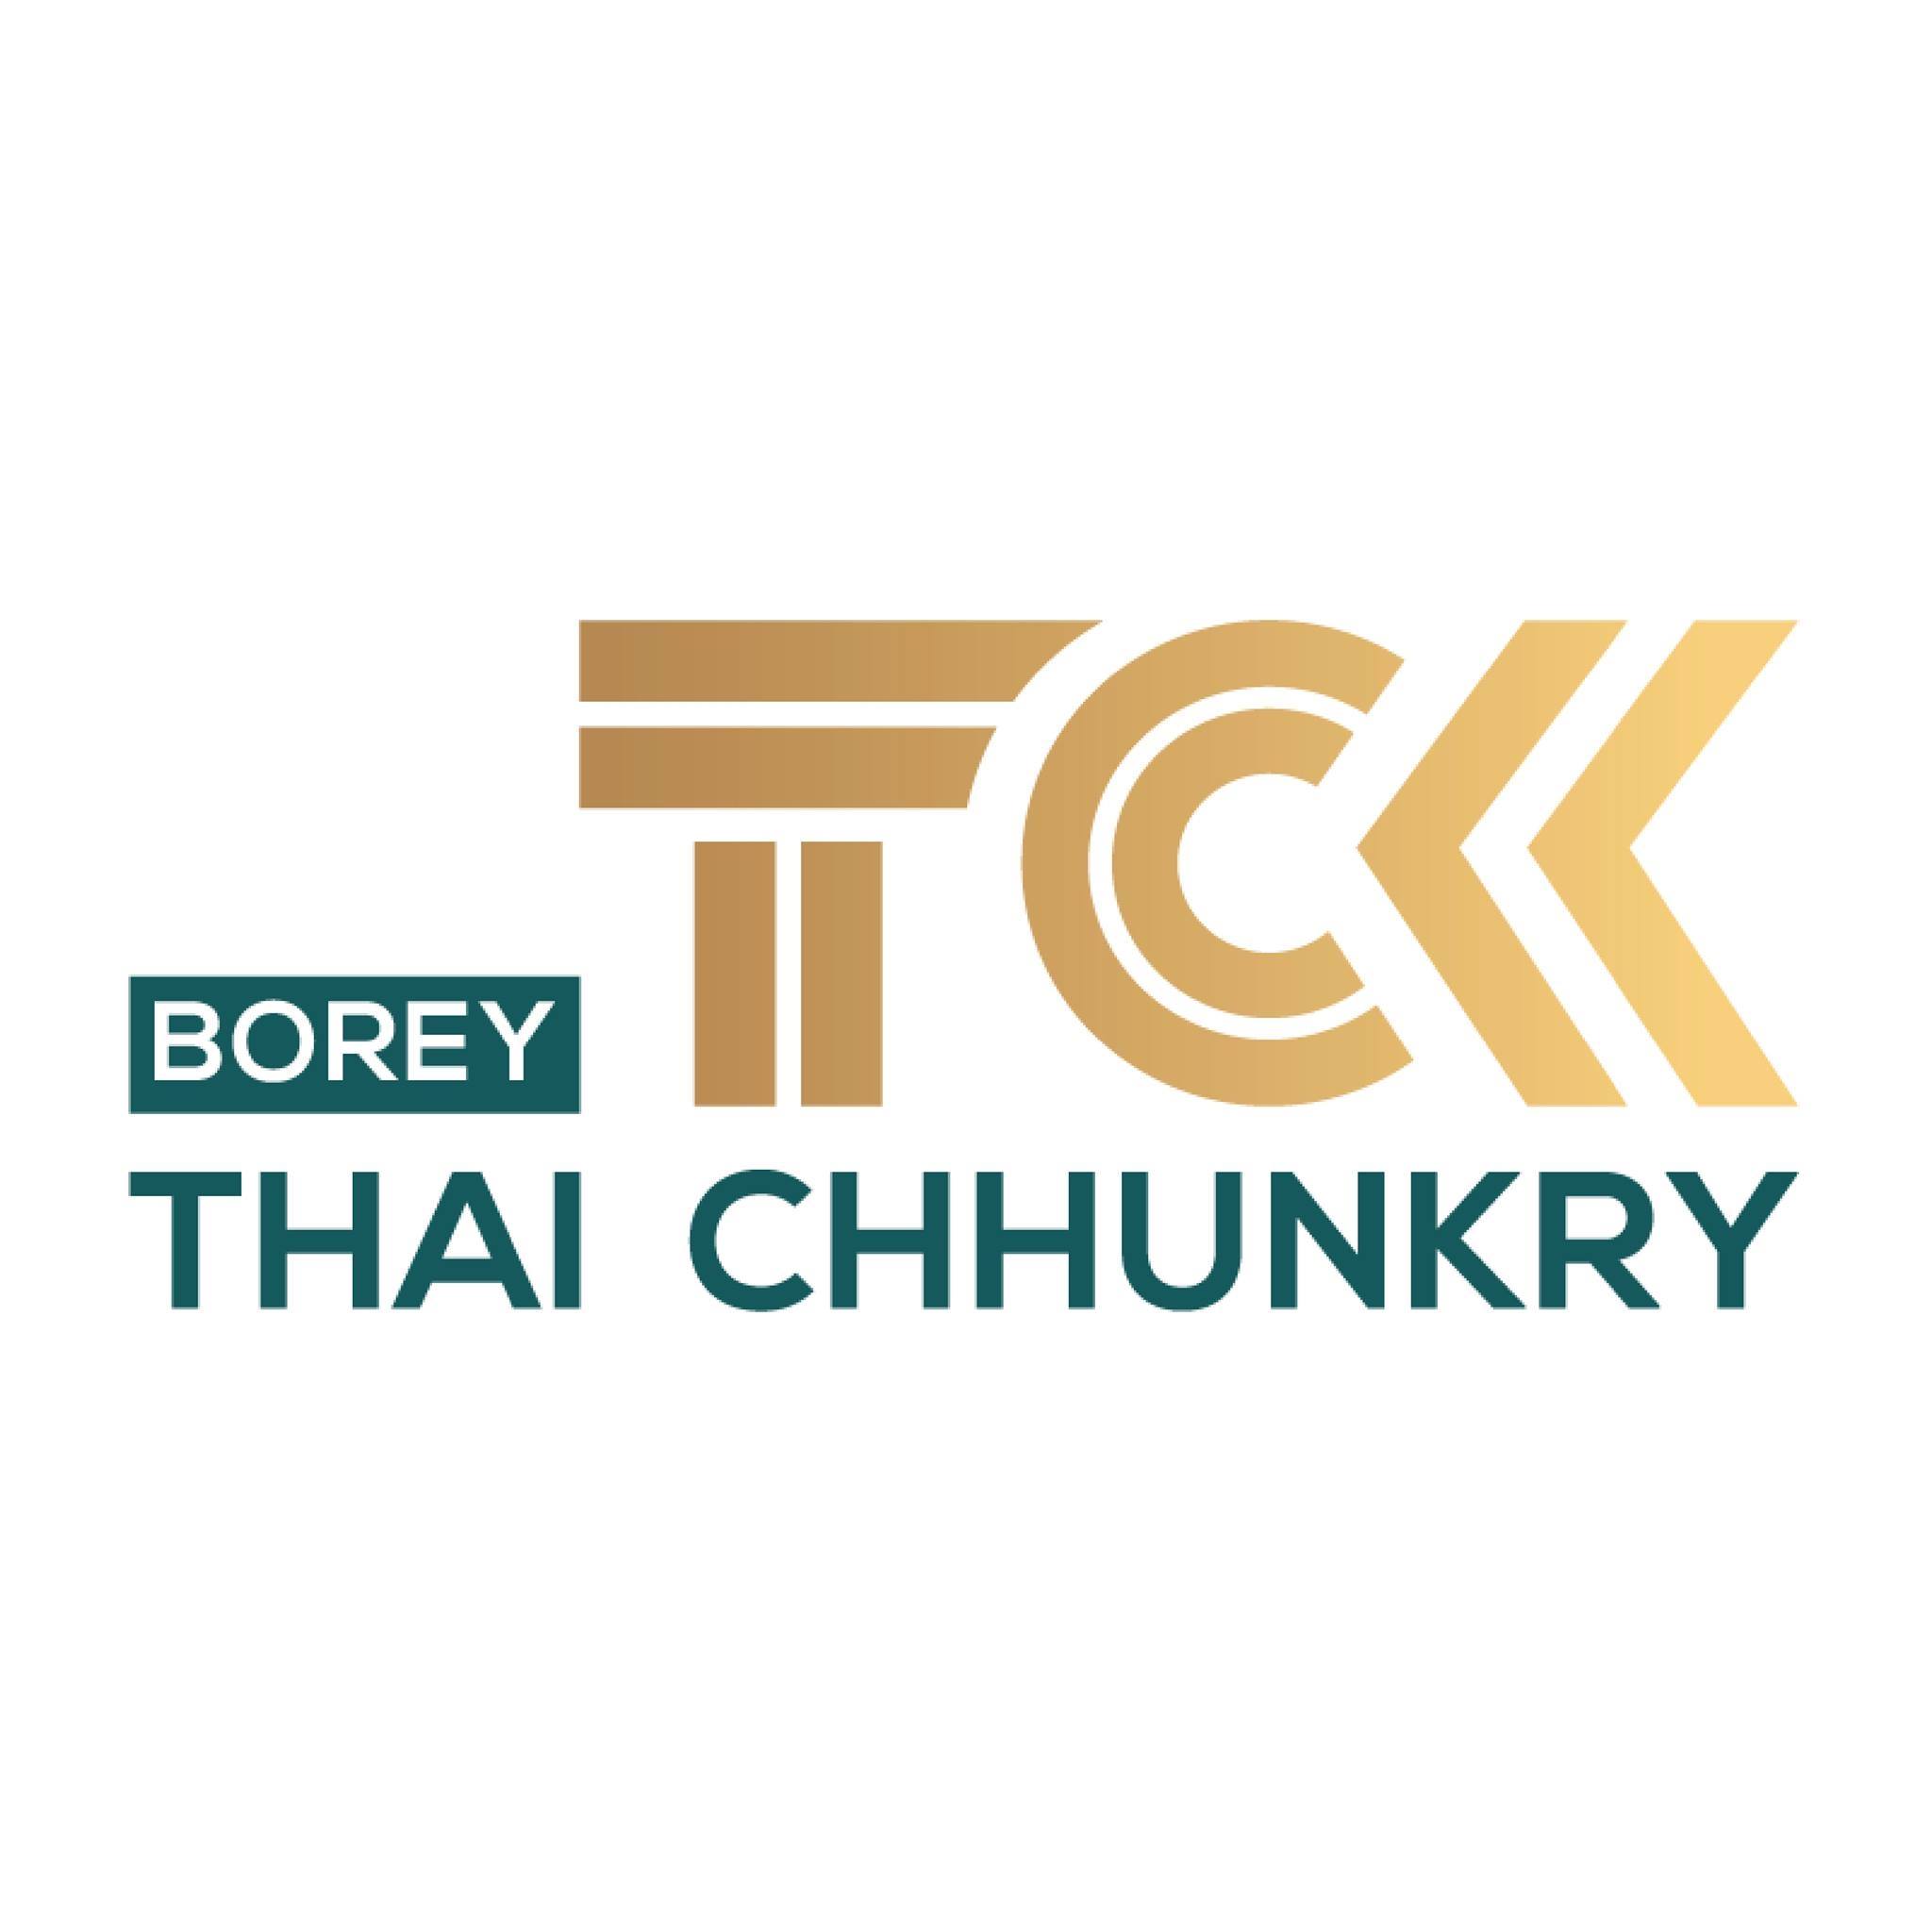 Borey Thai Chhunkry